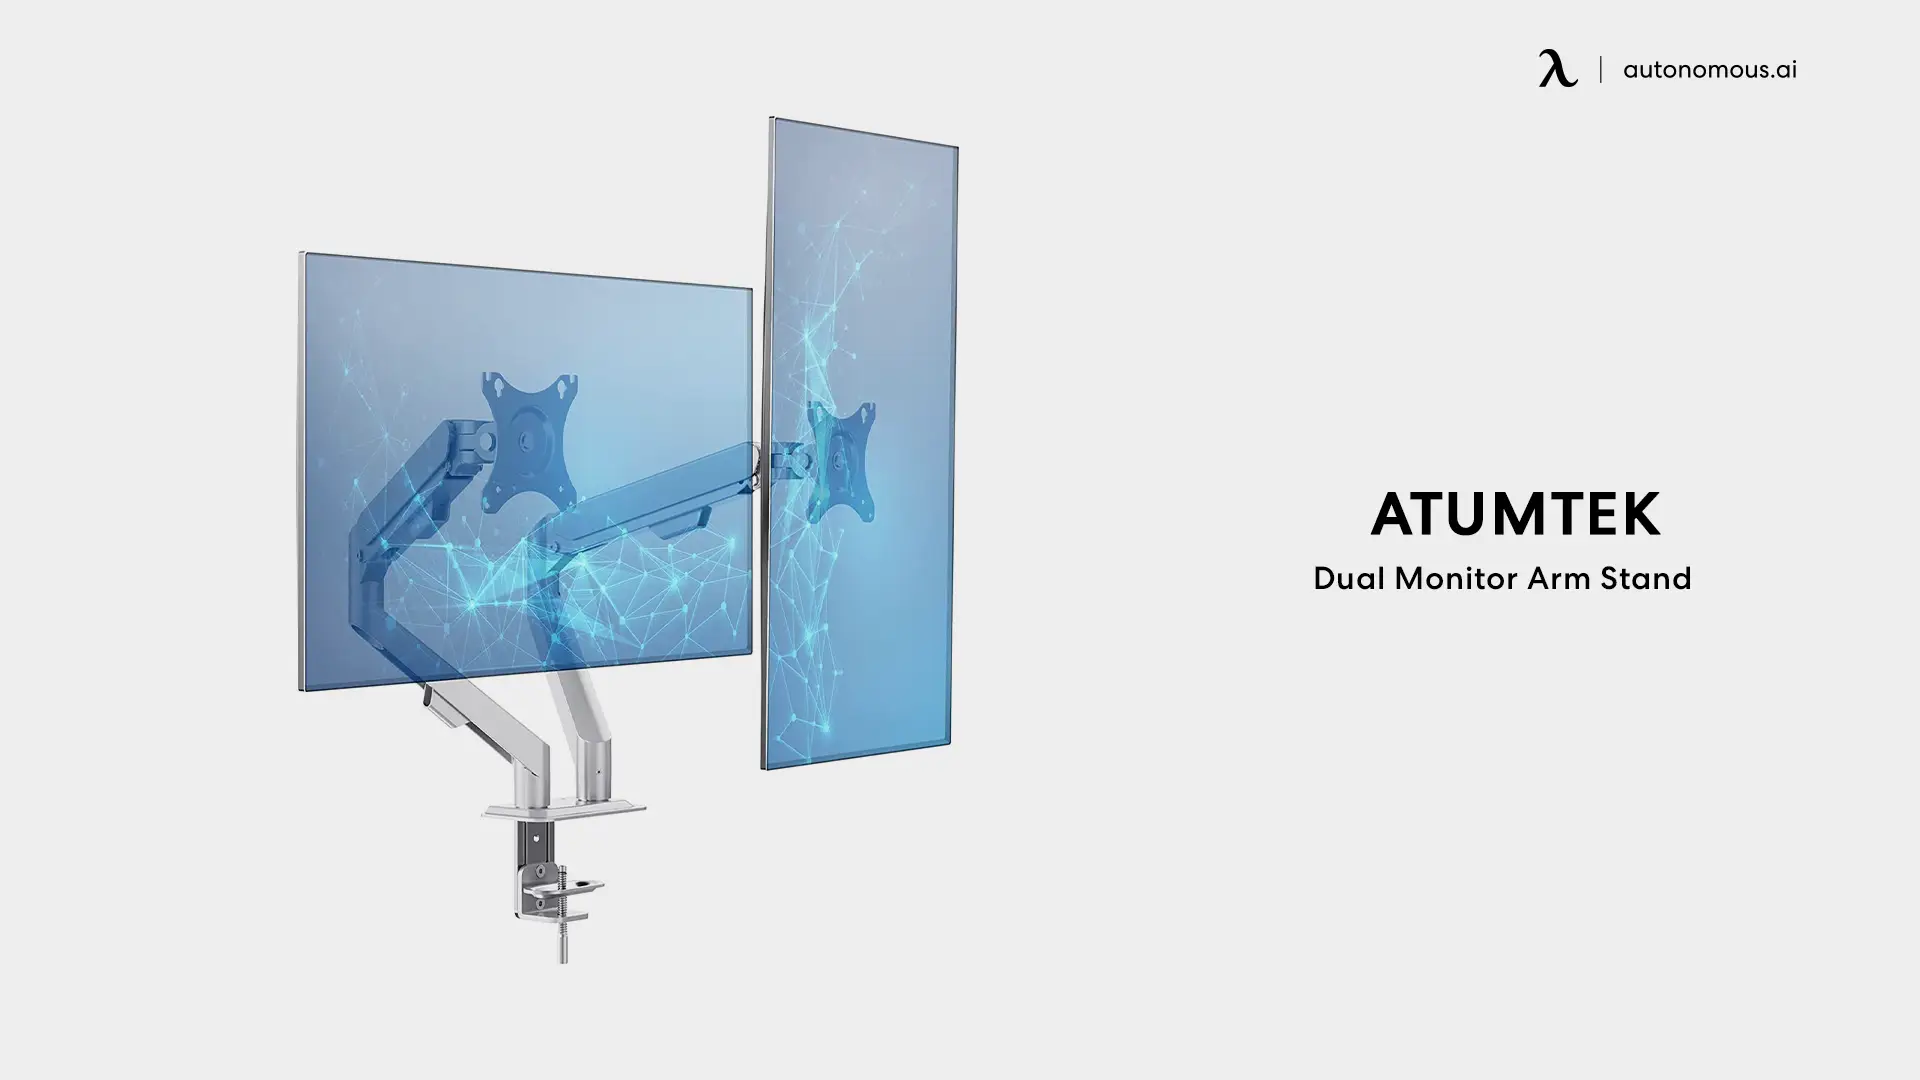 Atumtek Dual Monitor Arm Stand